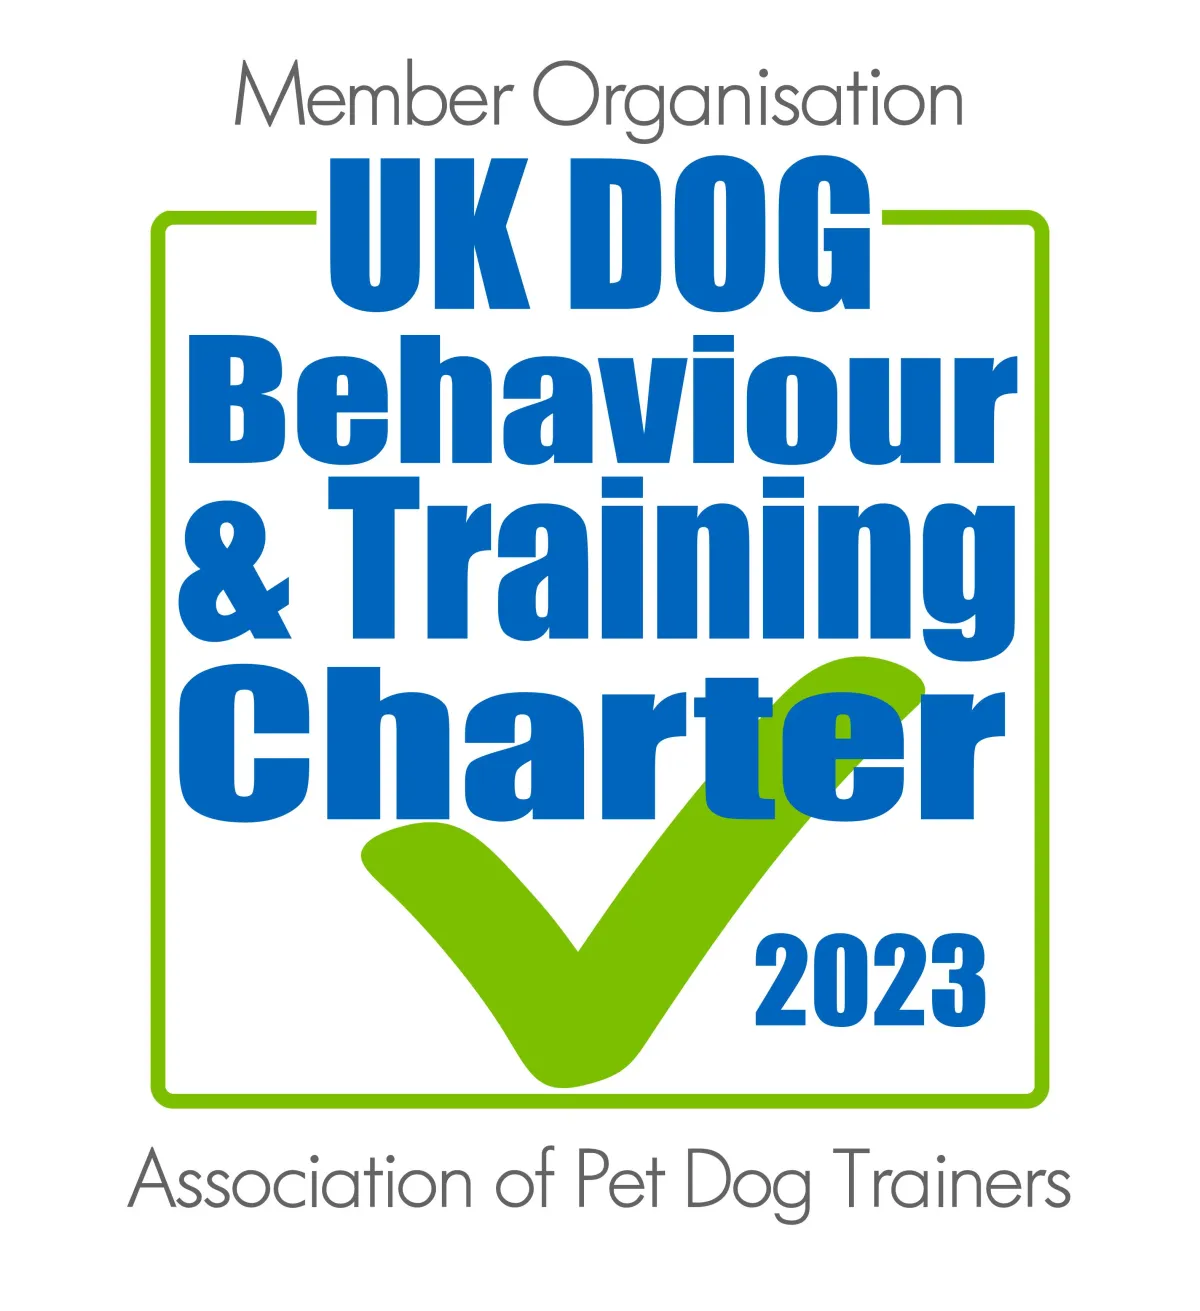 behaviour charter logo